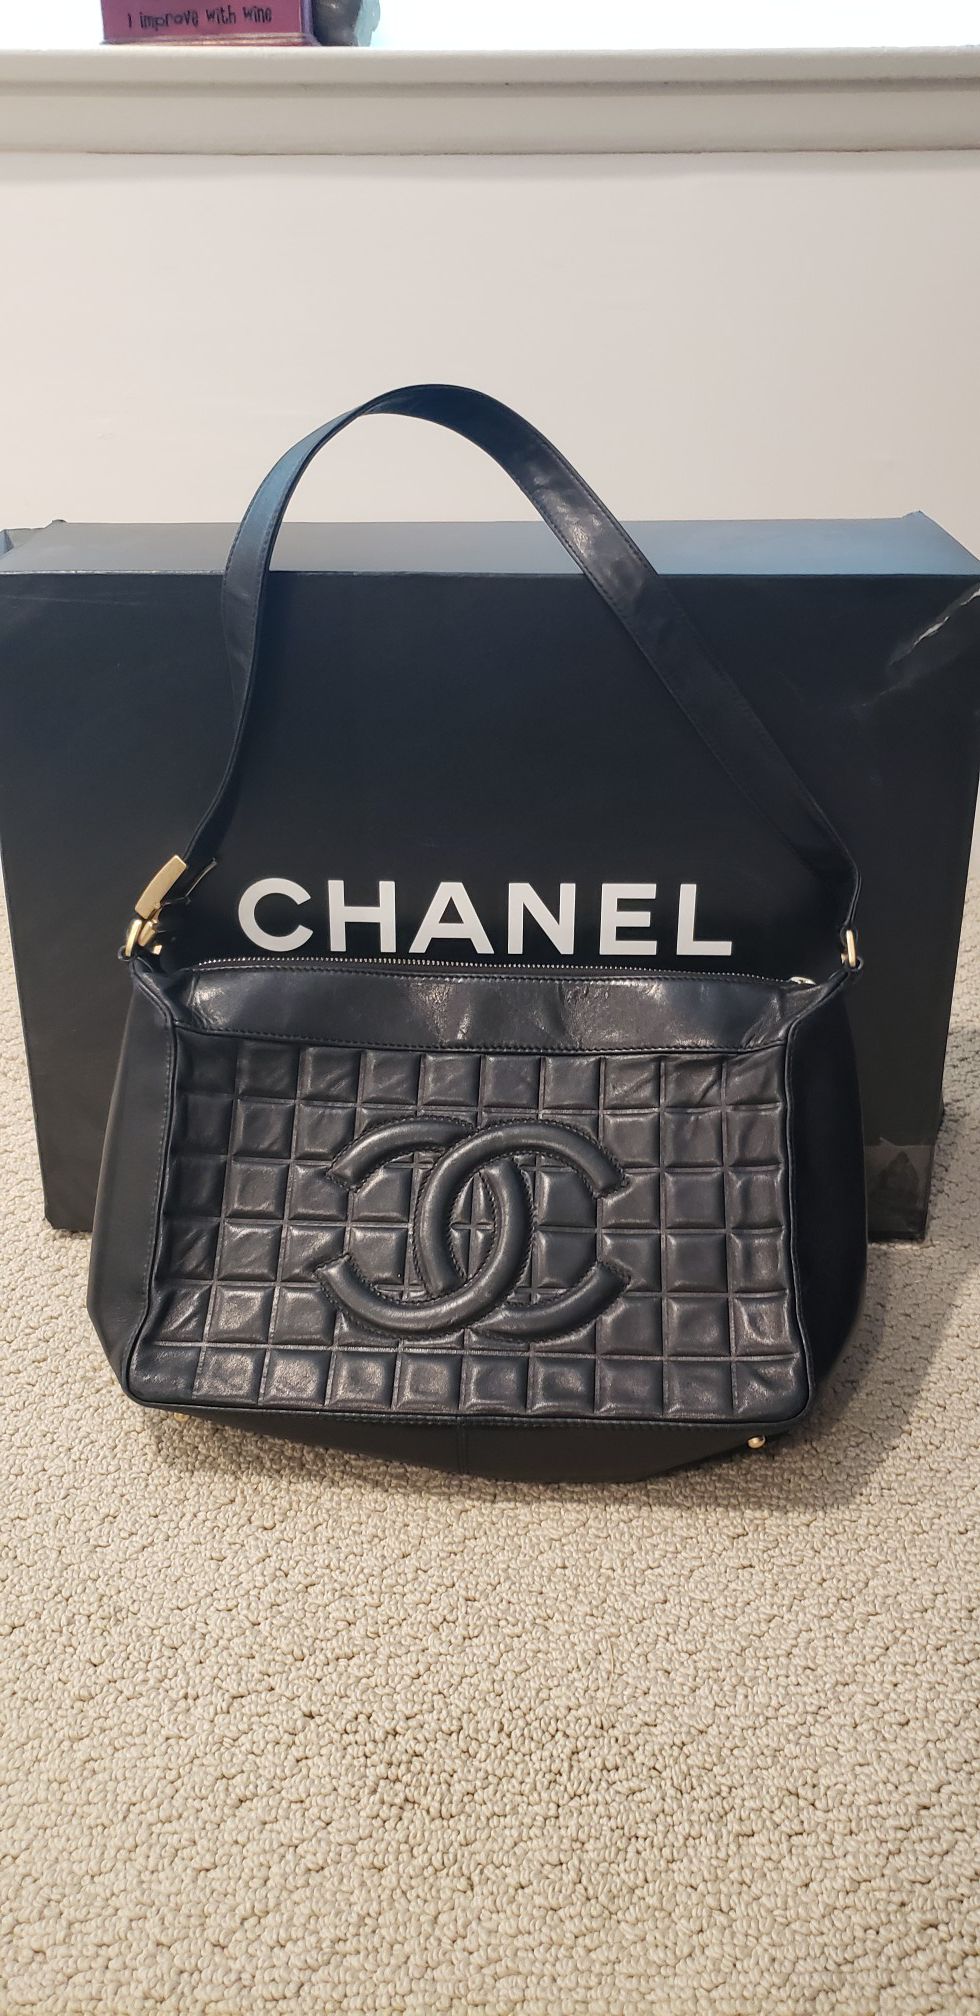 Chanel Authentic purse